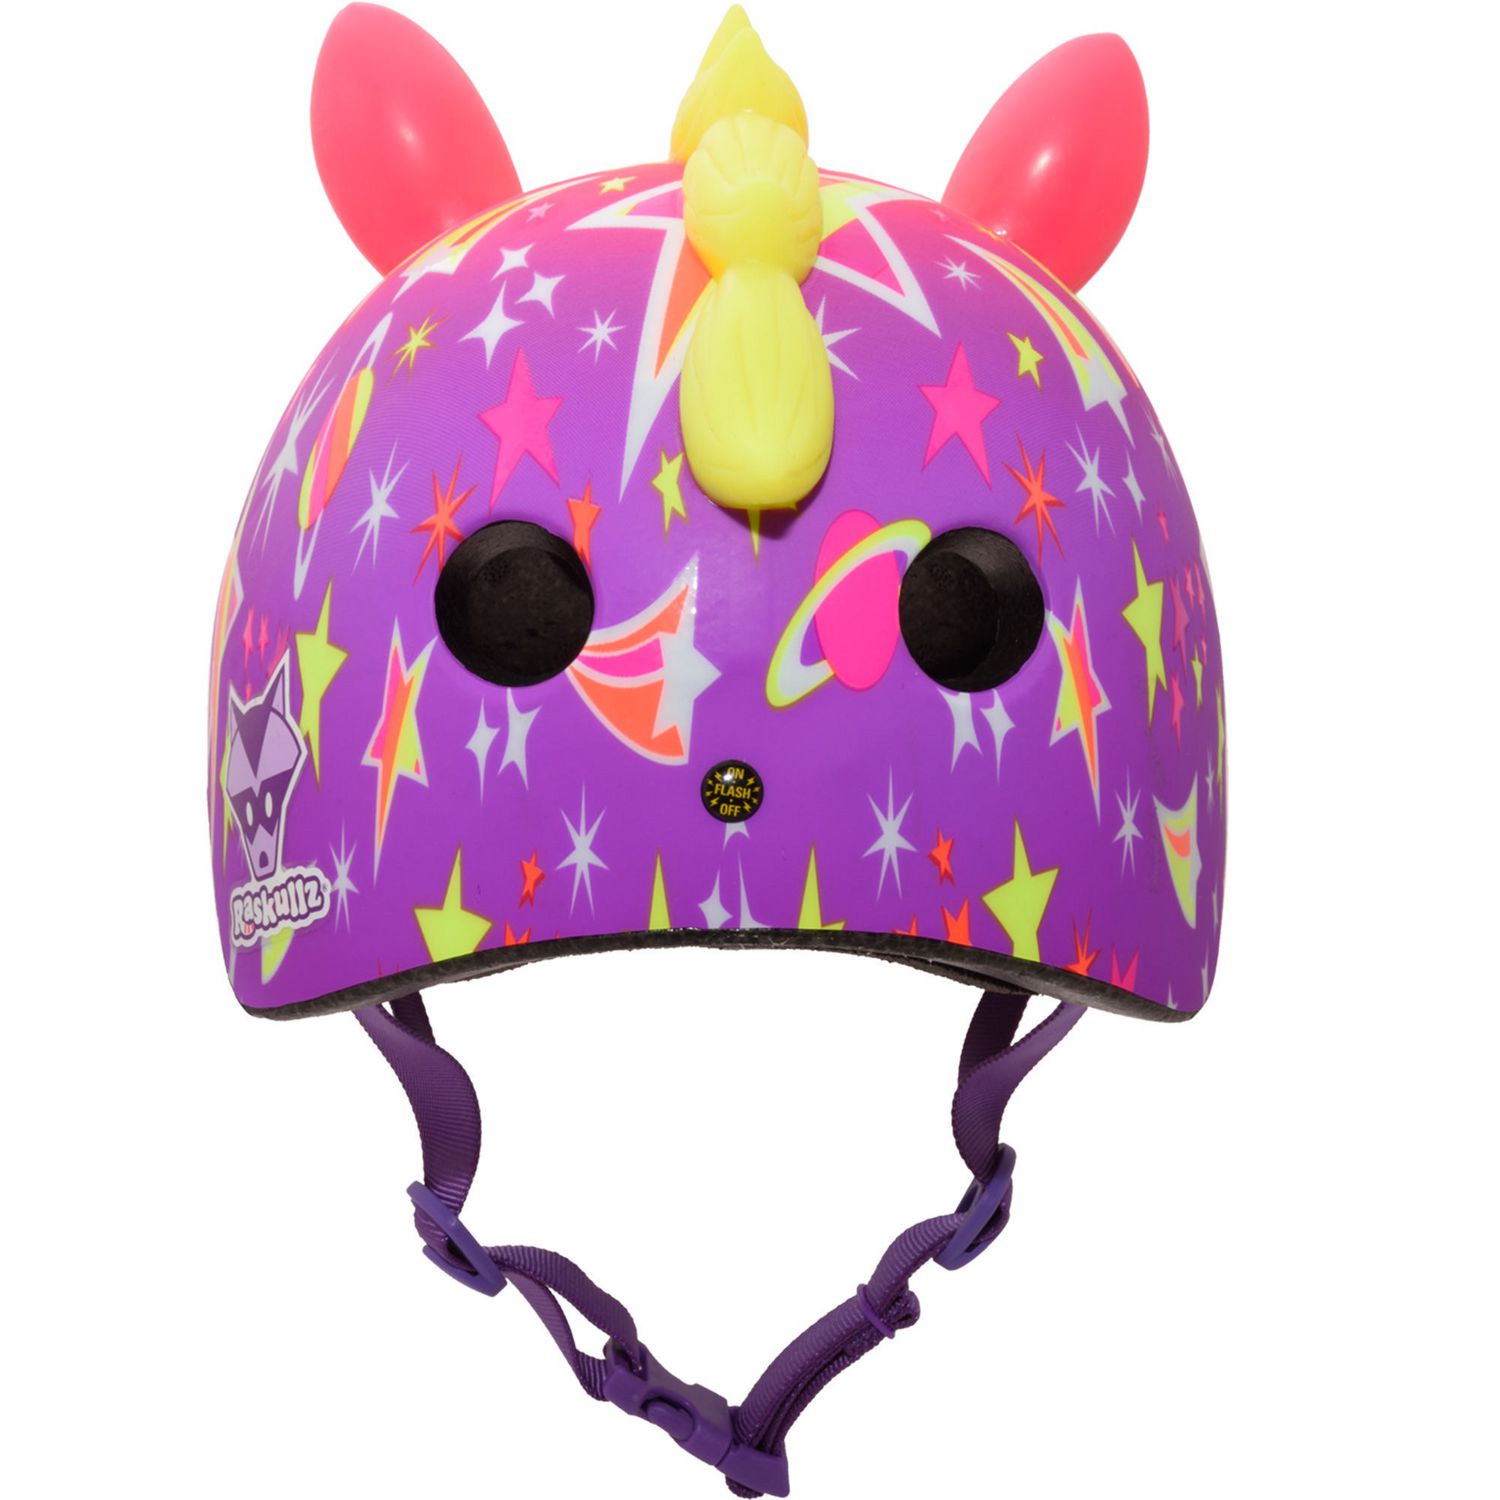 walmart unicorn bike helmet